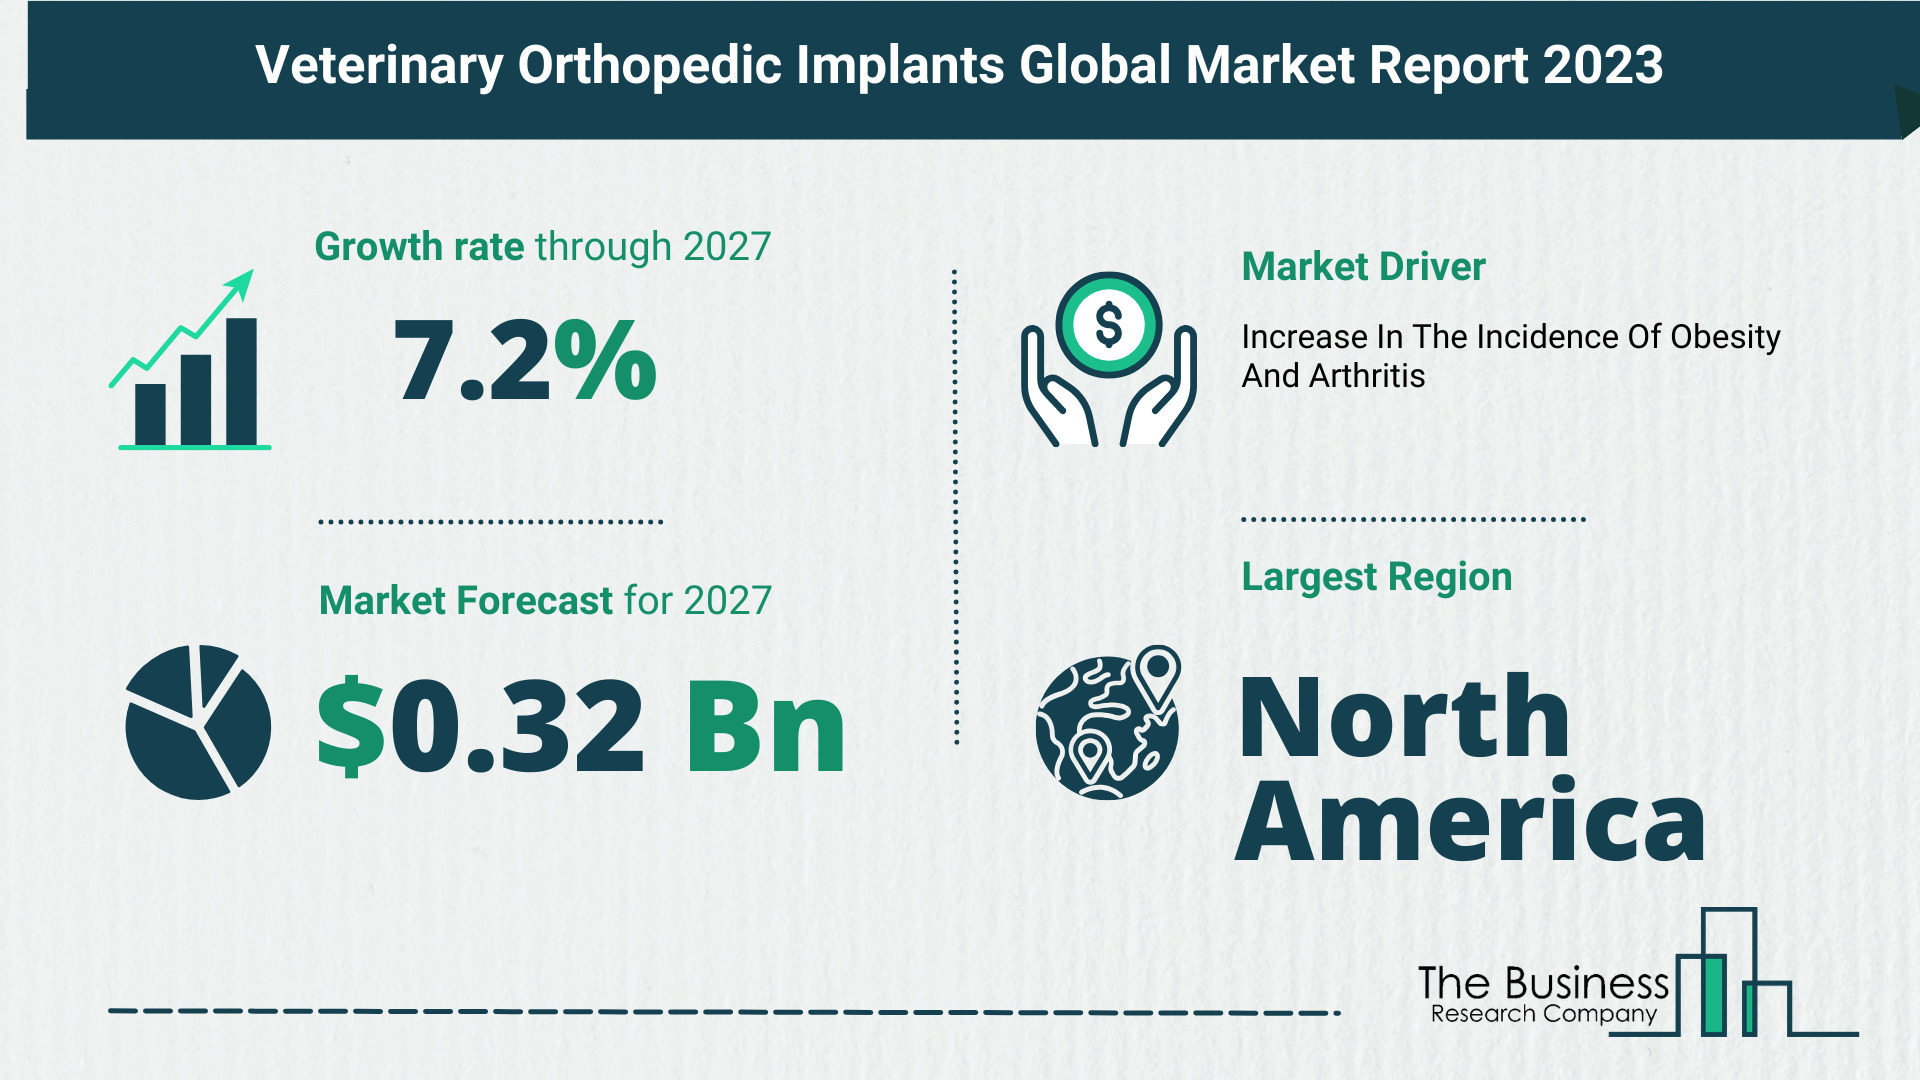 Global Veterinary Orthopedic Implants Market